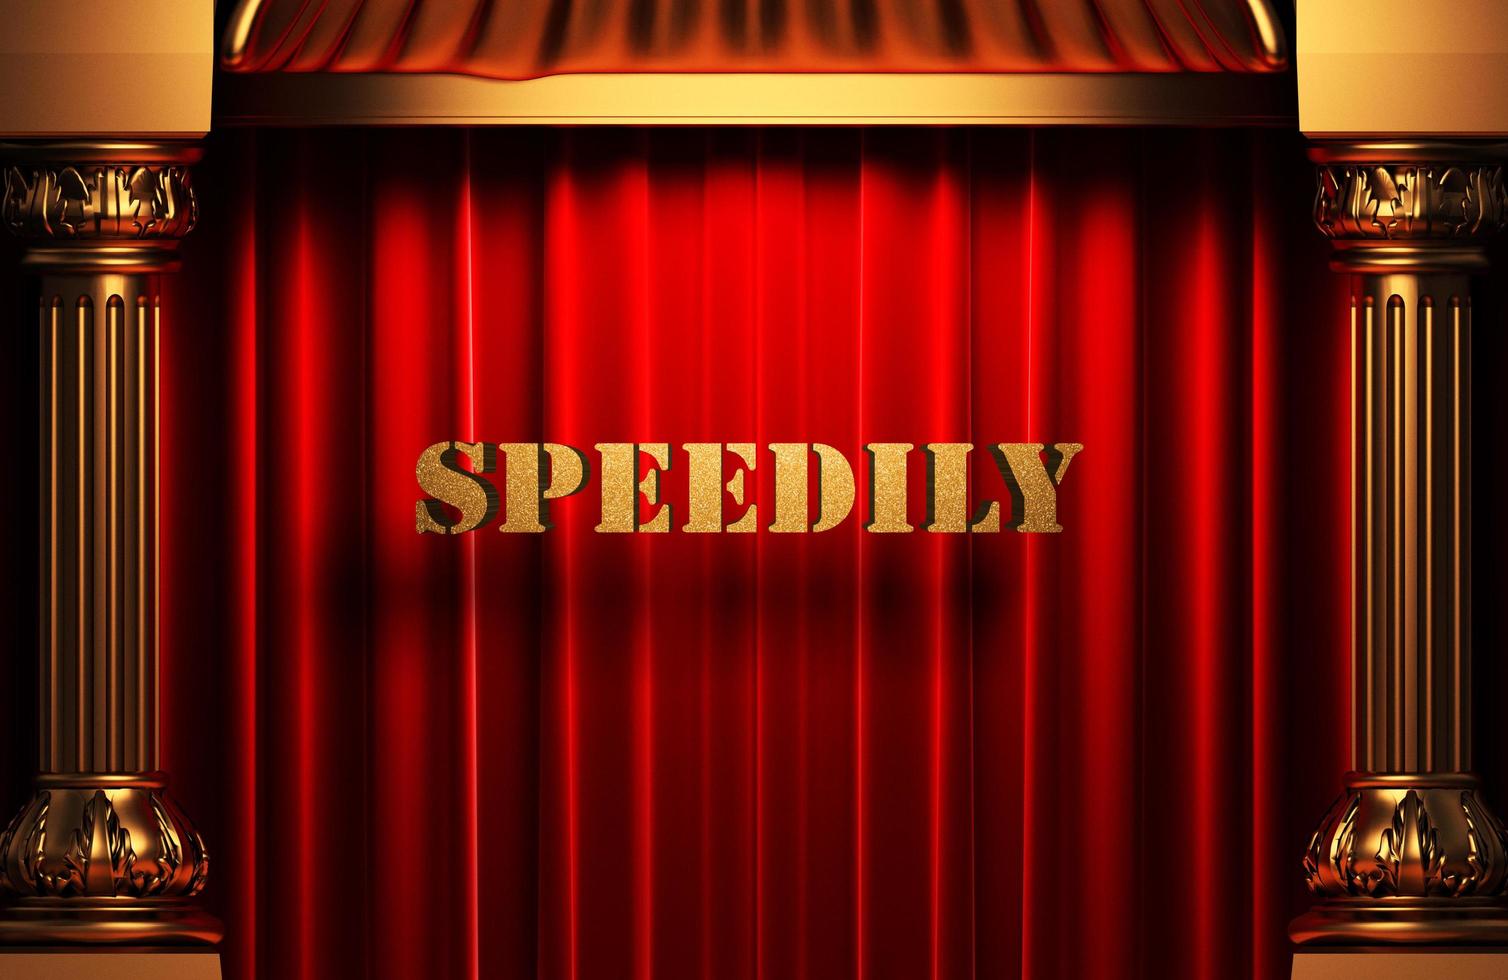 speedily golden word on red curtain photo